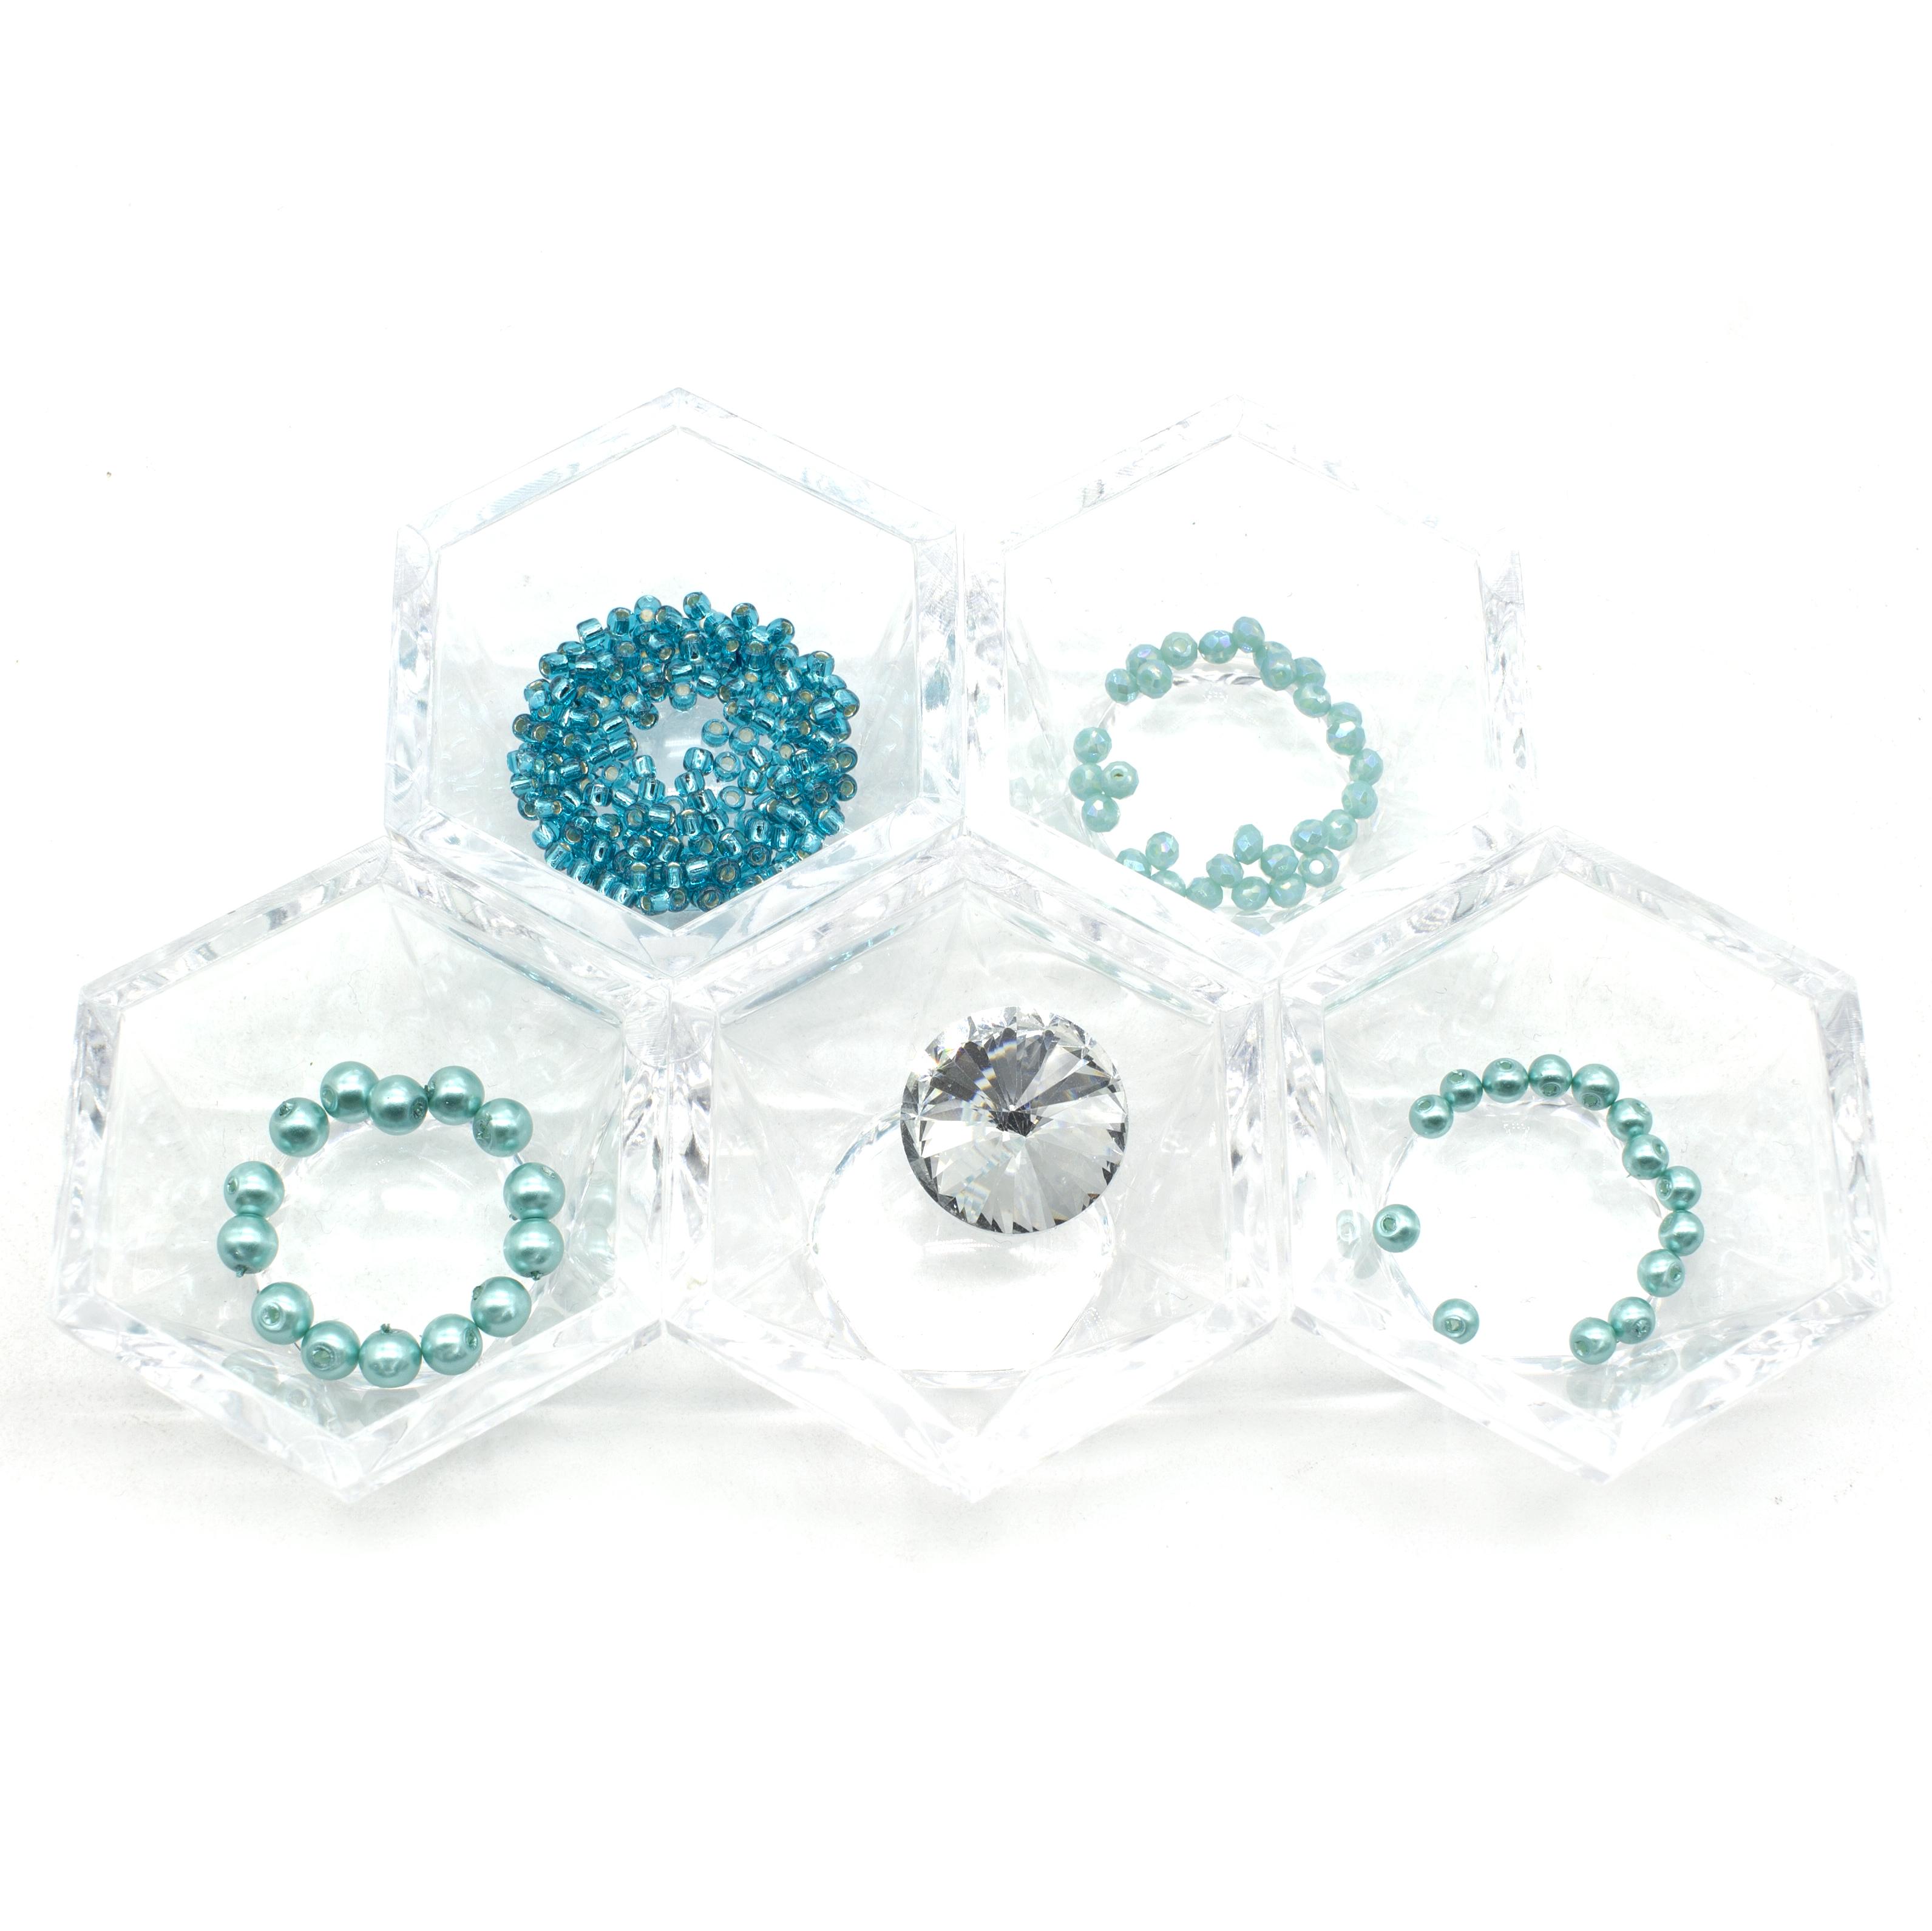 Bling Rings Pack - Turquoise